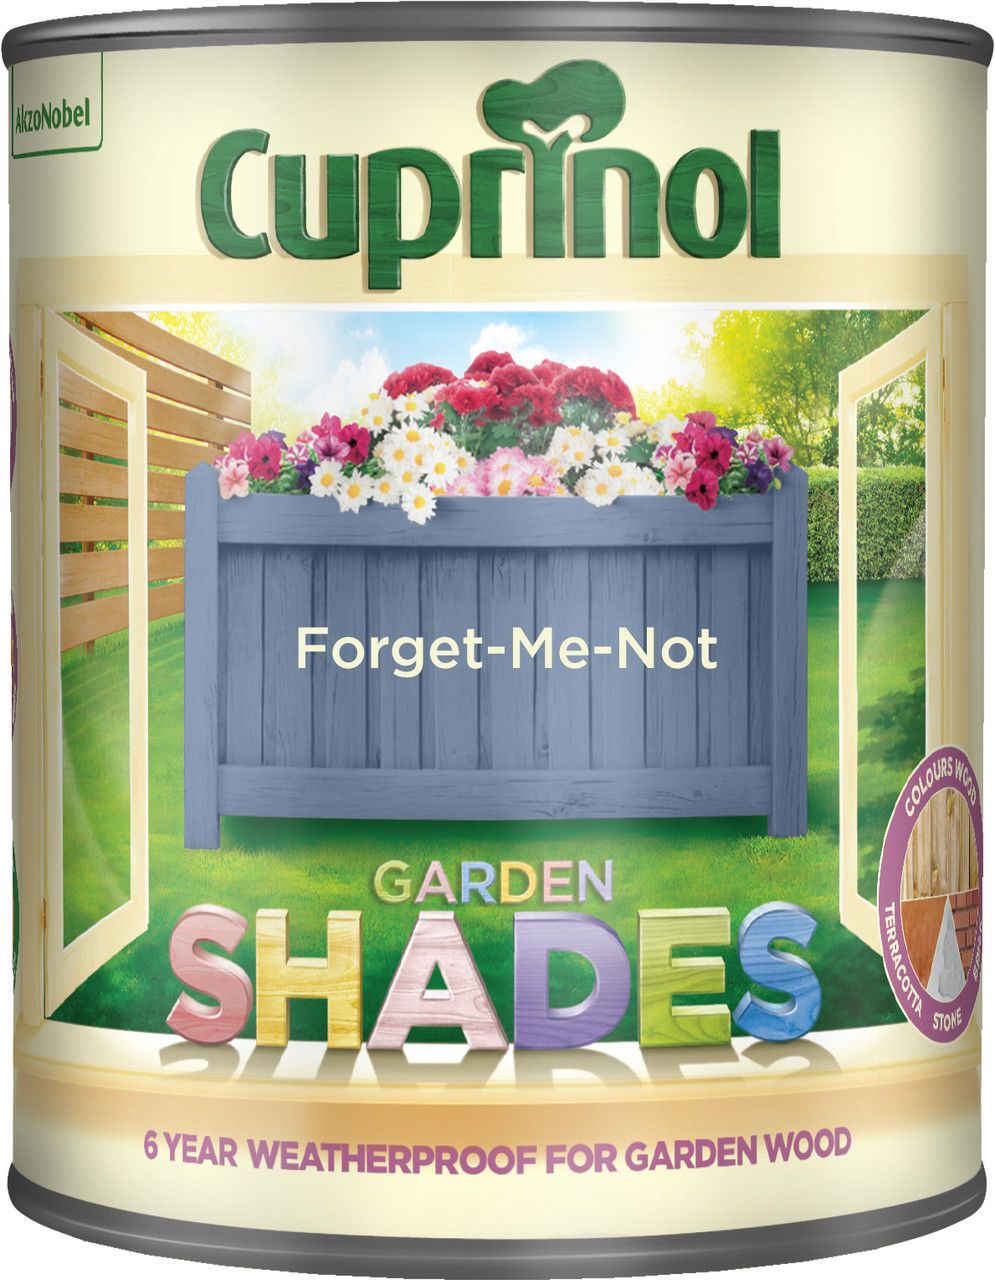 Cuprinol-Garden-Shades-Exterior-Woodcare-Forget-Me-Not-1L